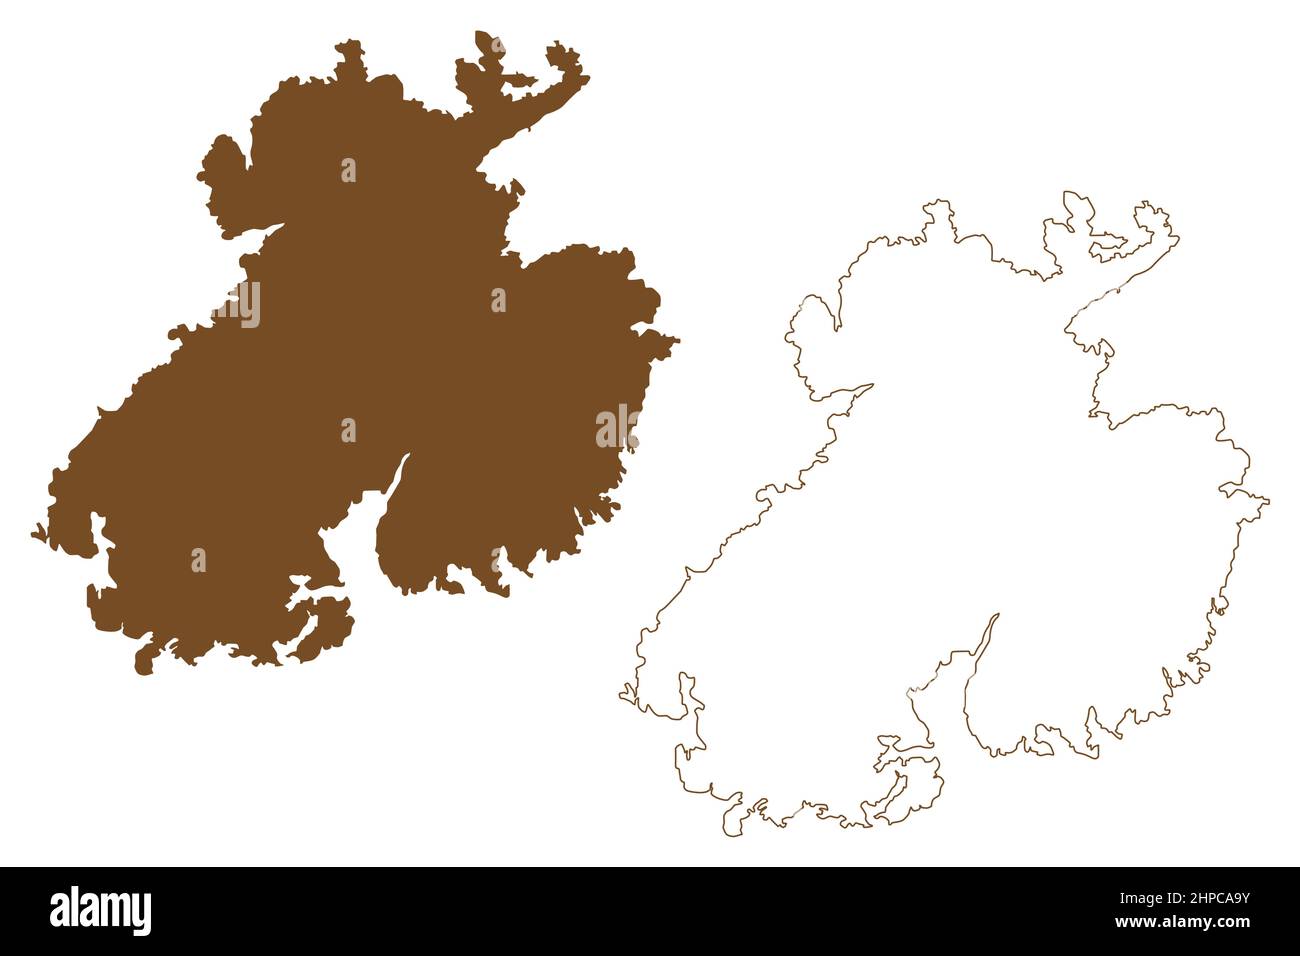 Ostersocknen island (Republic of Finland, Aland Islands) map vector illustration, scribble sketch Östersocknen map Stock Vector